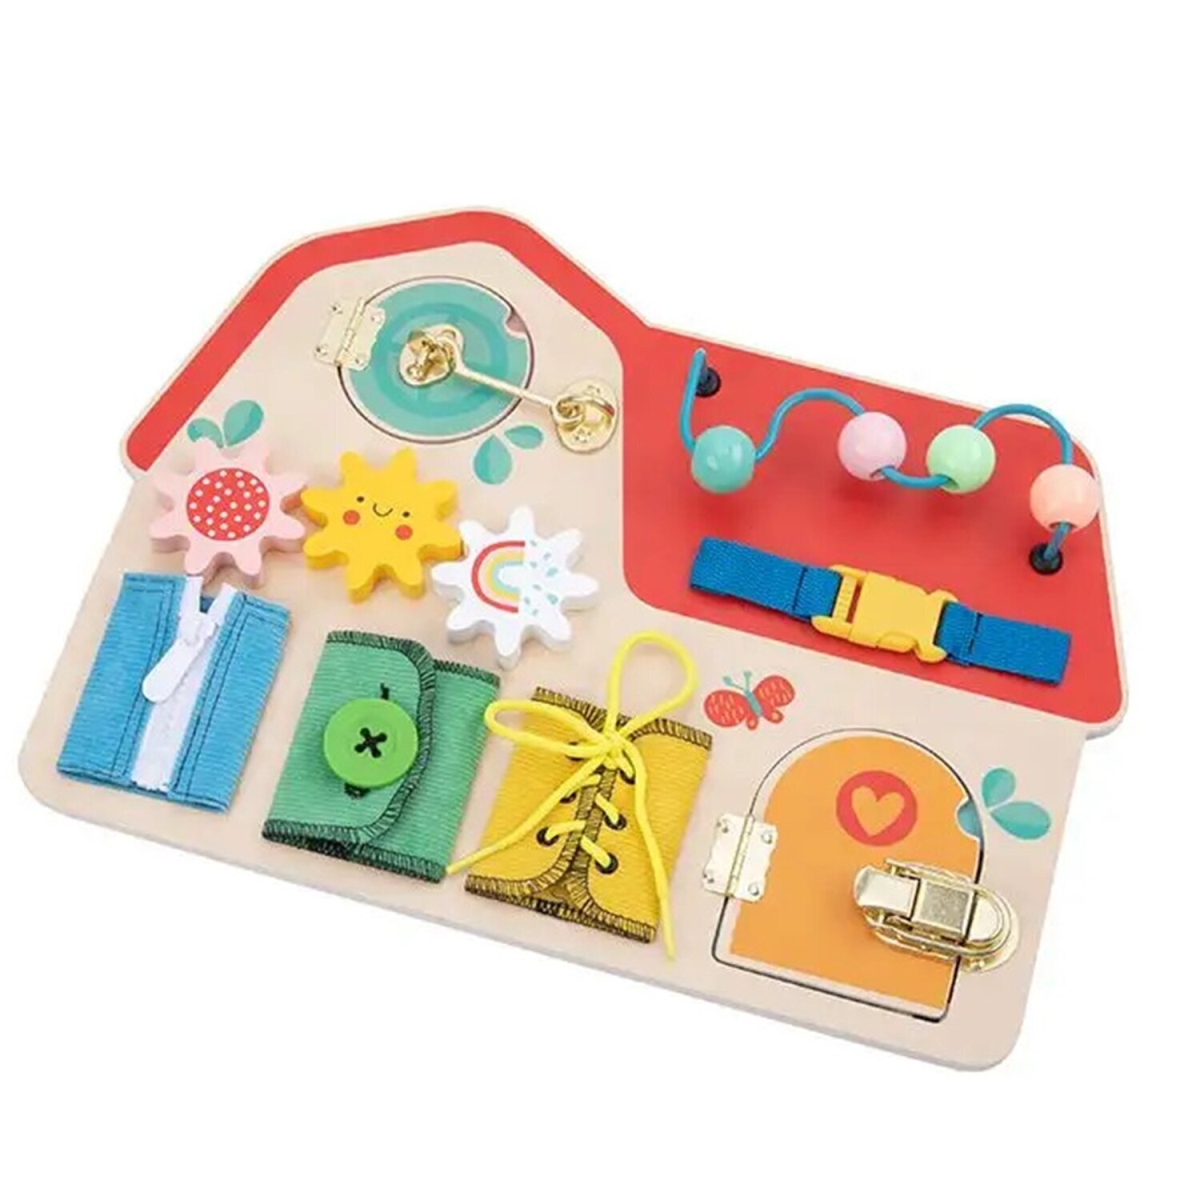 300200 40 x 30 x 7 cm Busy Board -  Tooky Toy